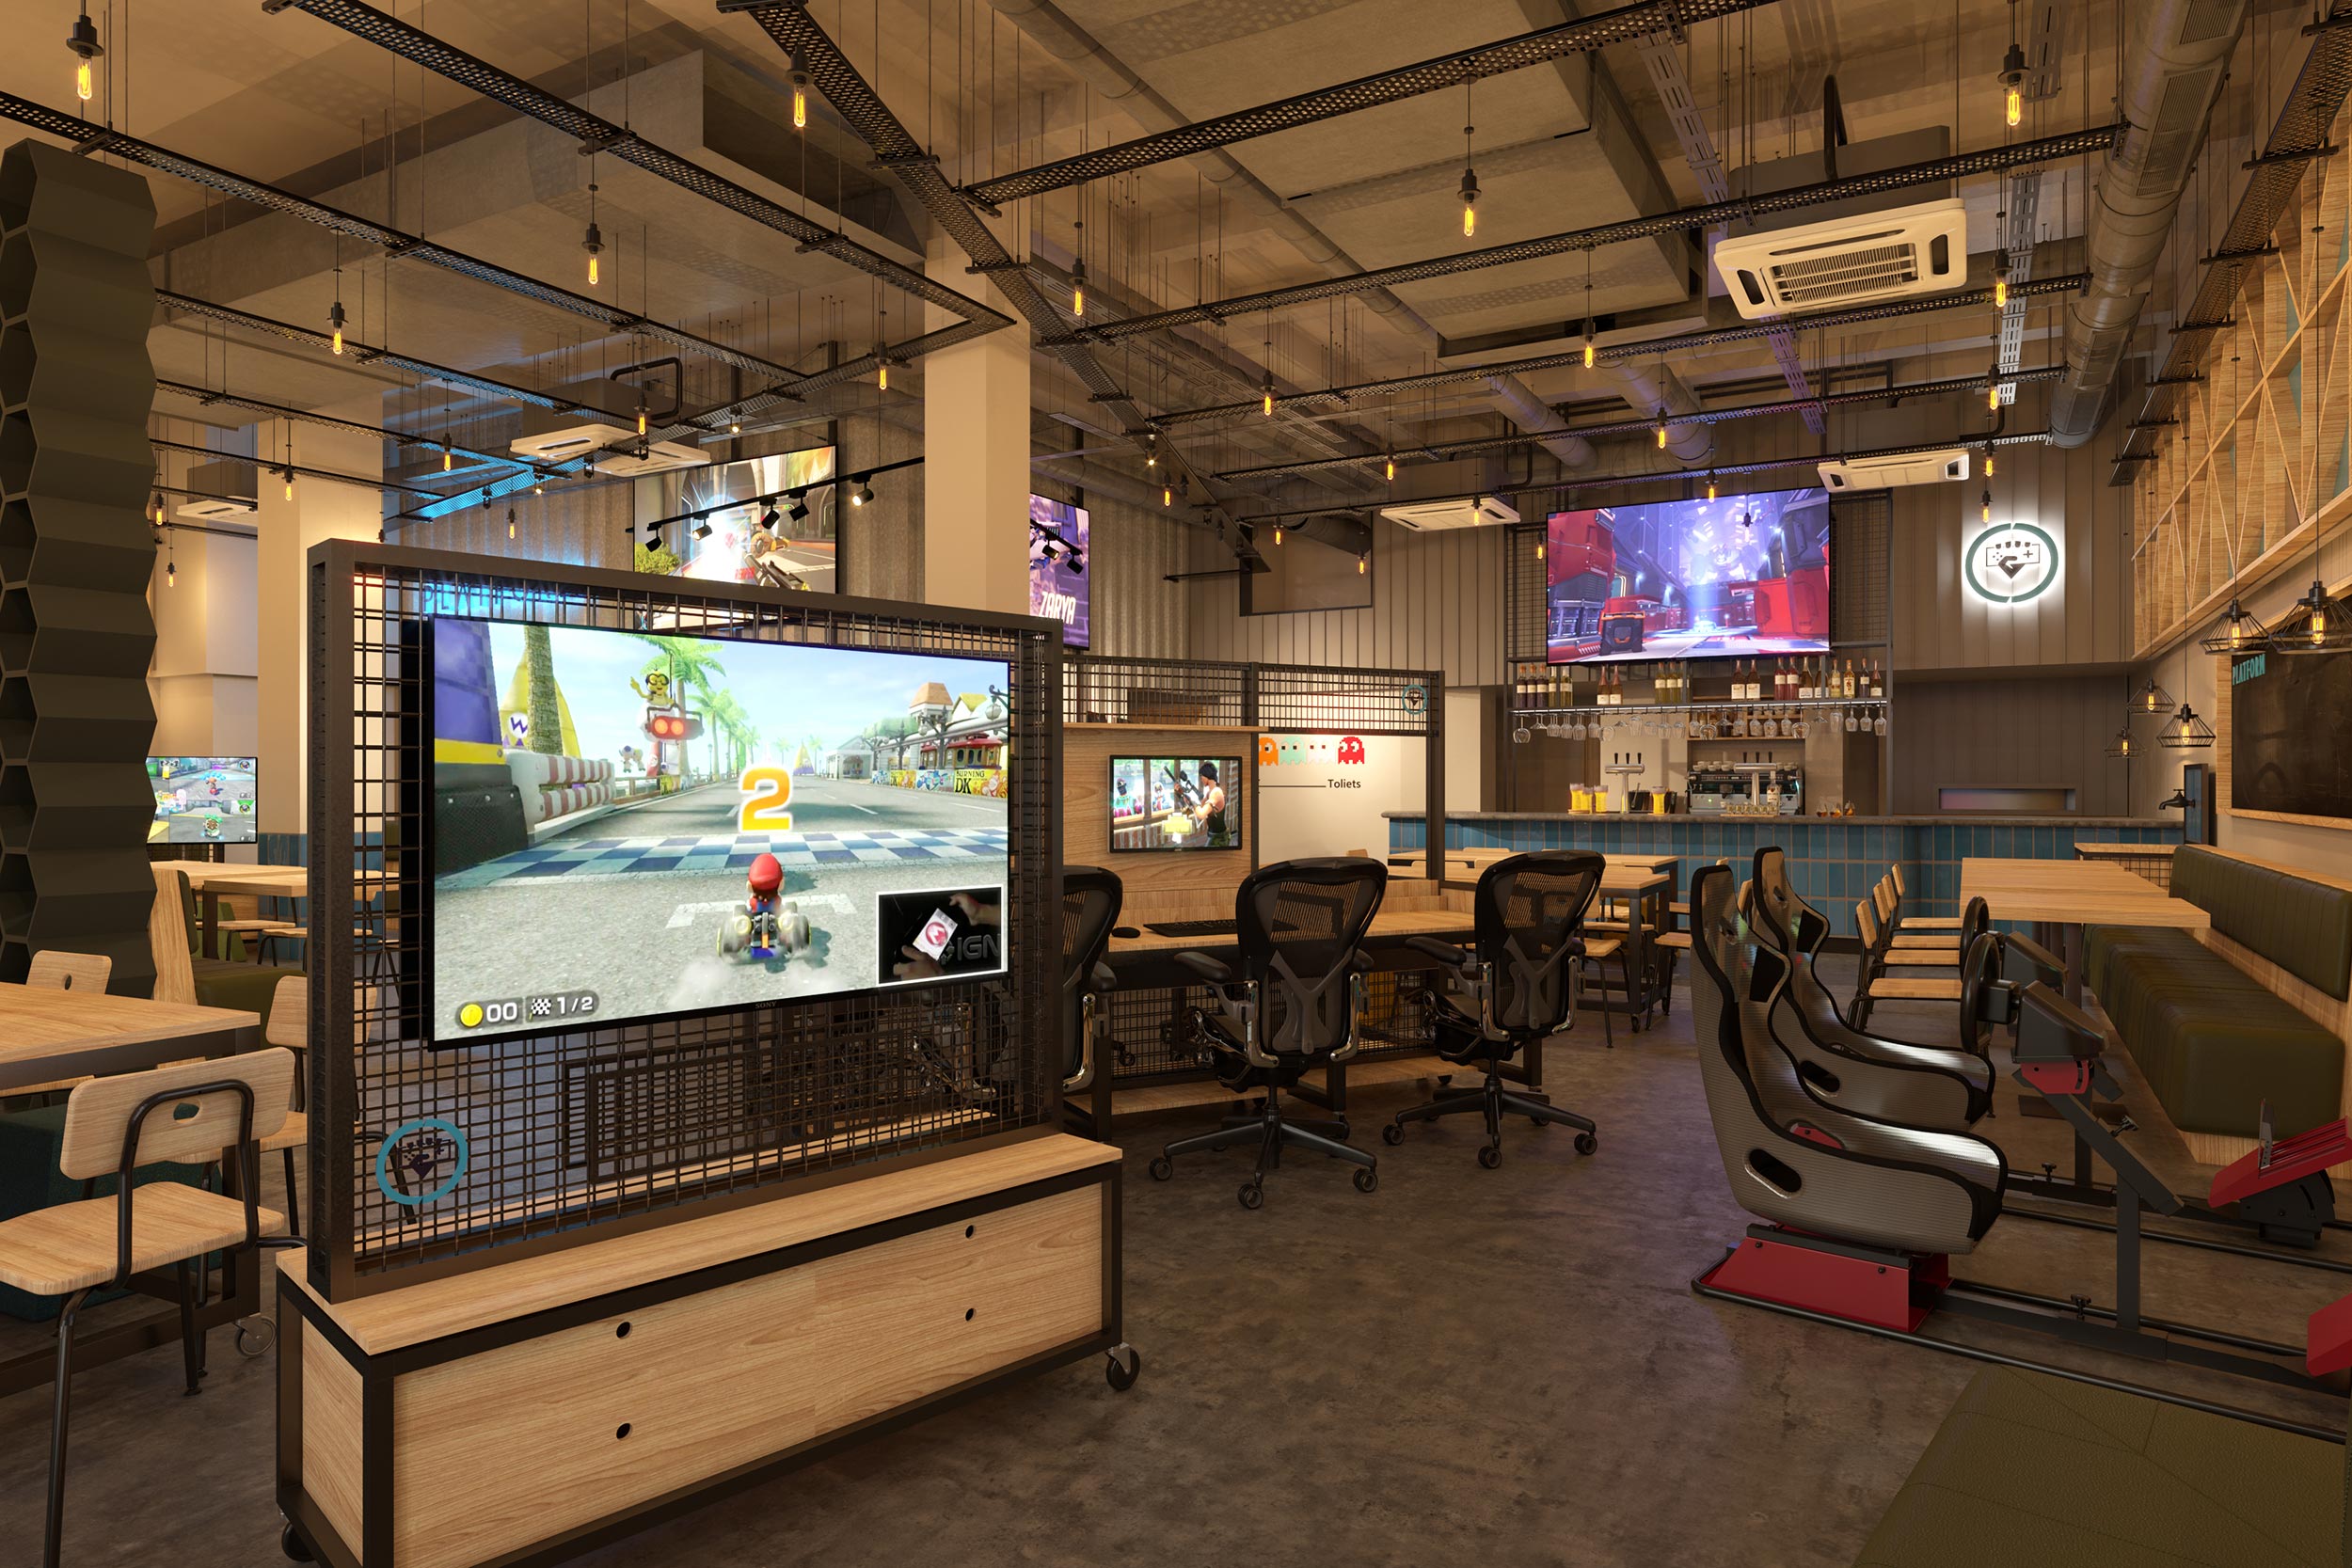 Platform Gaming Bar, Shoreditch Commercial Retail Interior Design Visuals by Unit4 Studio, London